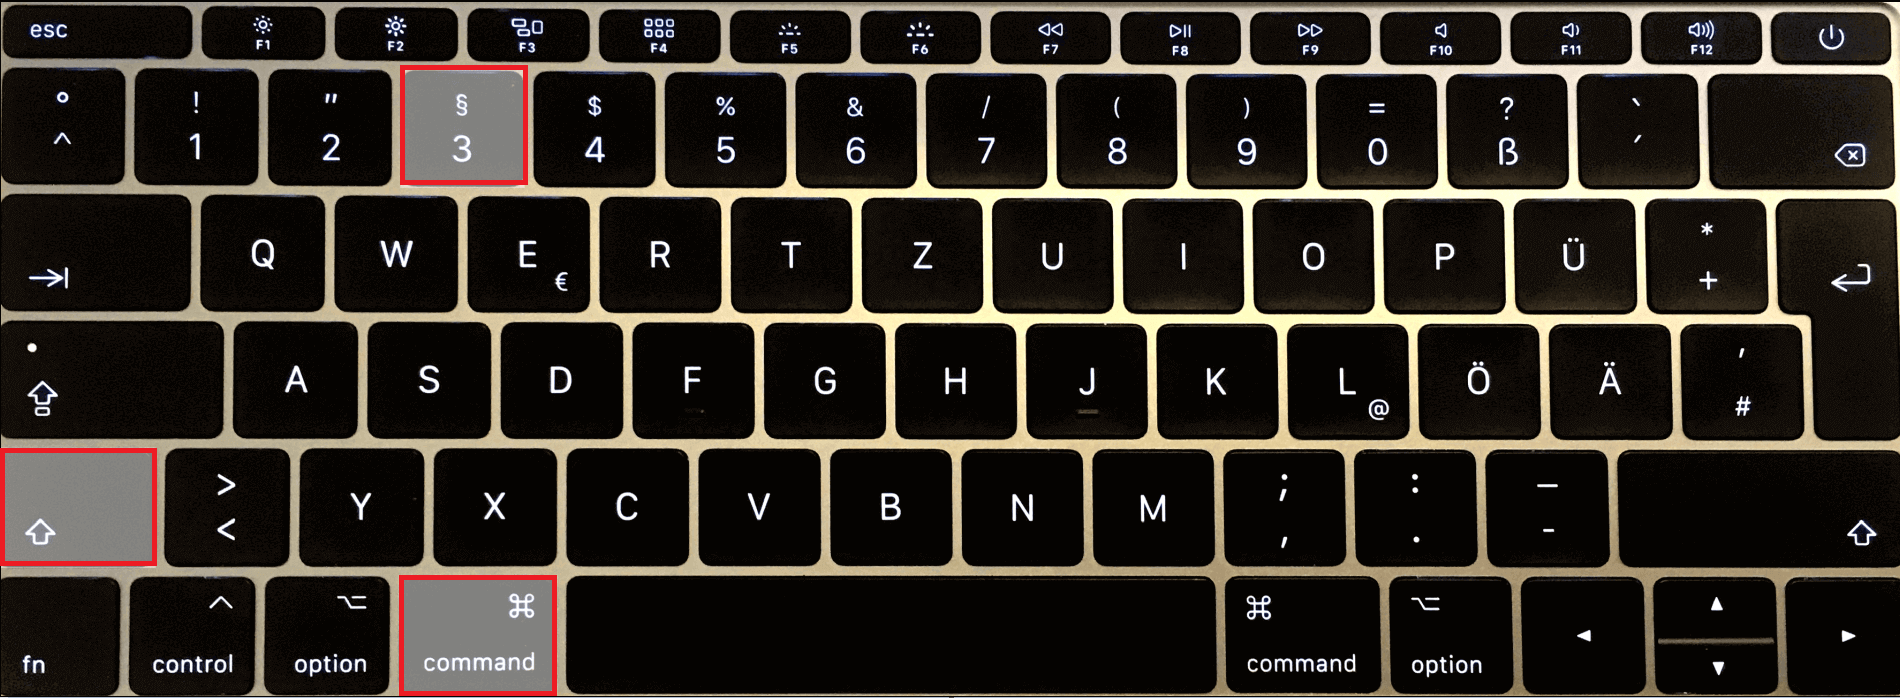 short key for a screenshot mac